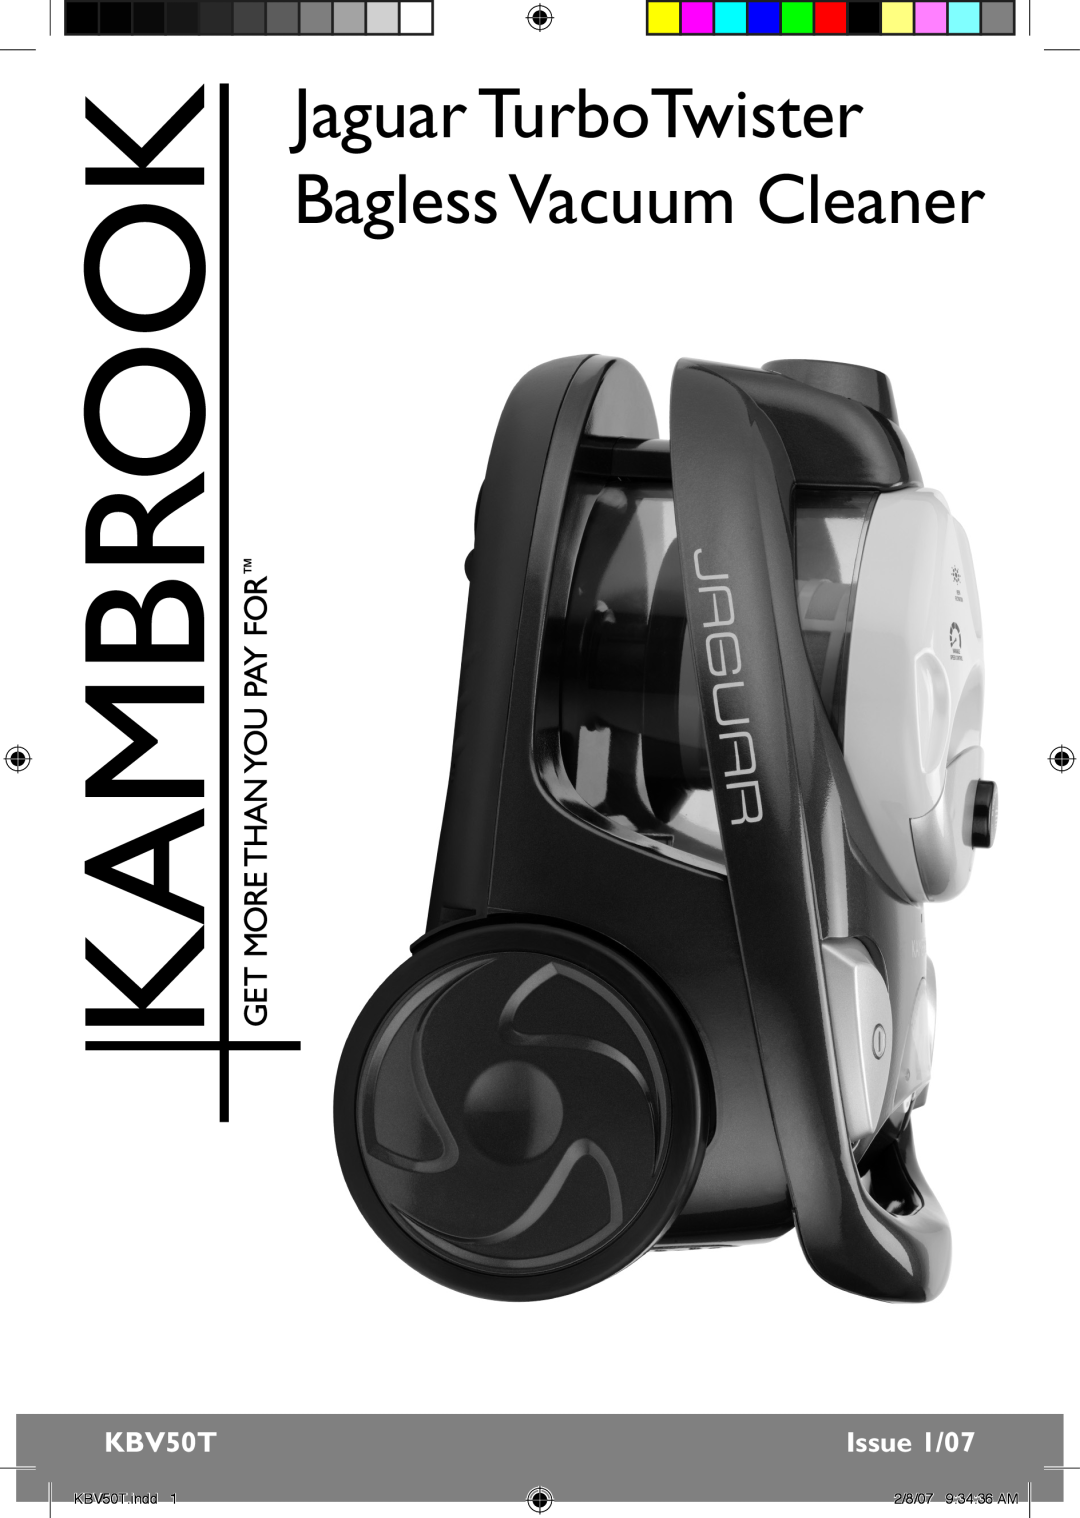 Kambrook manual Jaguar TurboTwister Bagless Vacuum Cleaner, Issue 1/07, KBV50T.indd, 2/8/07 9 34 36 AM 